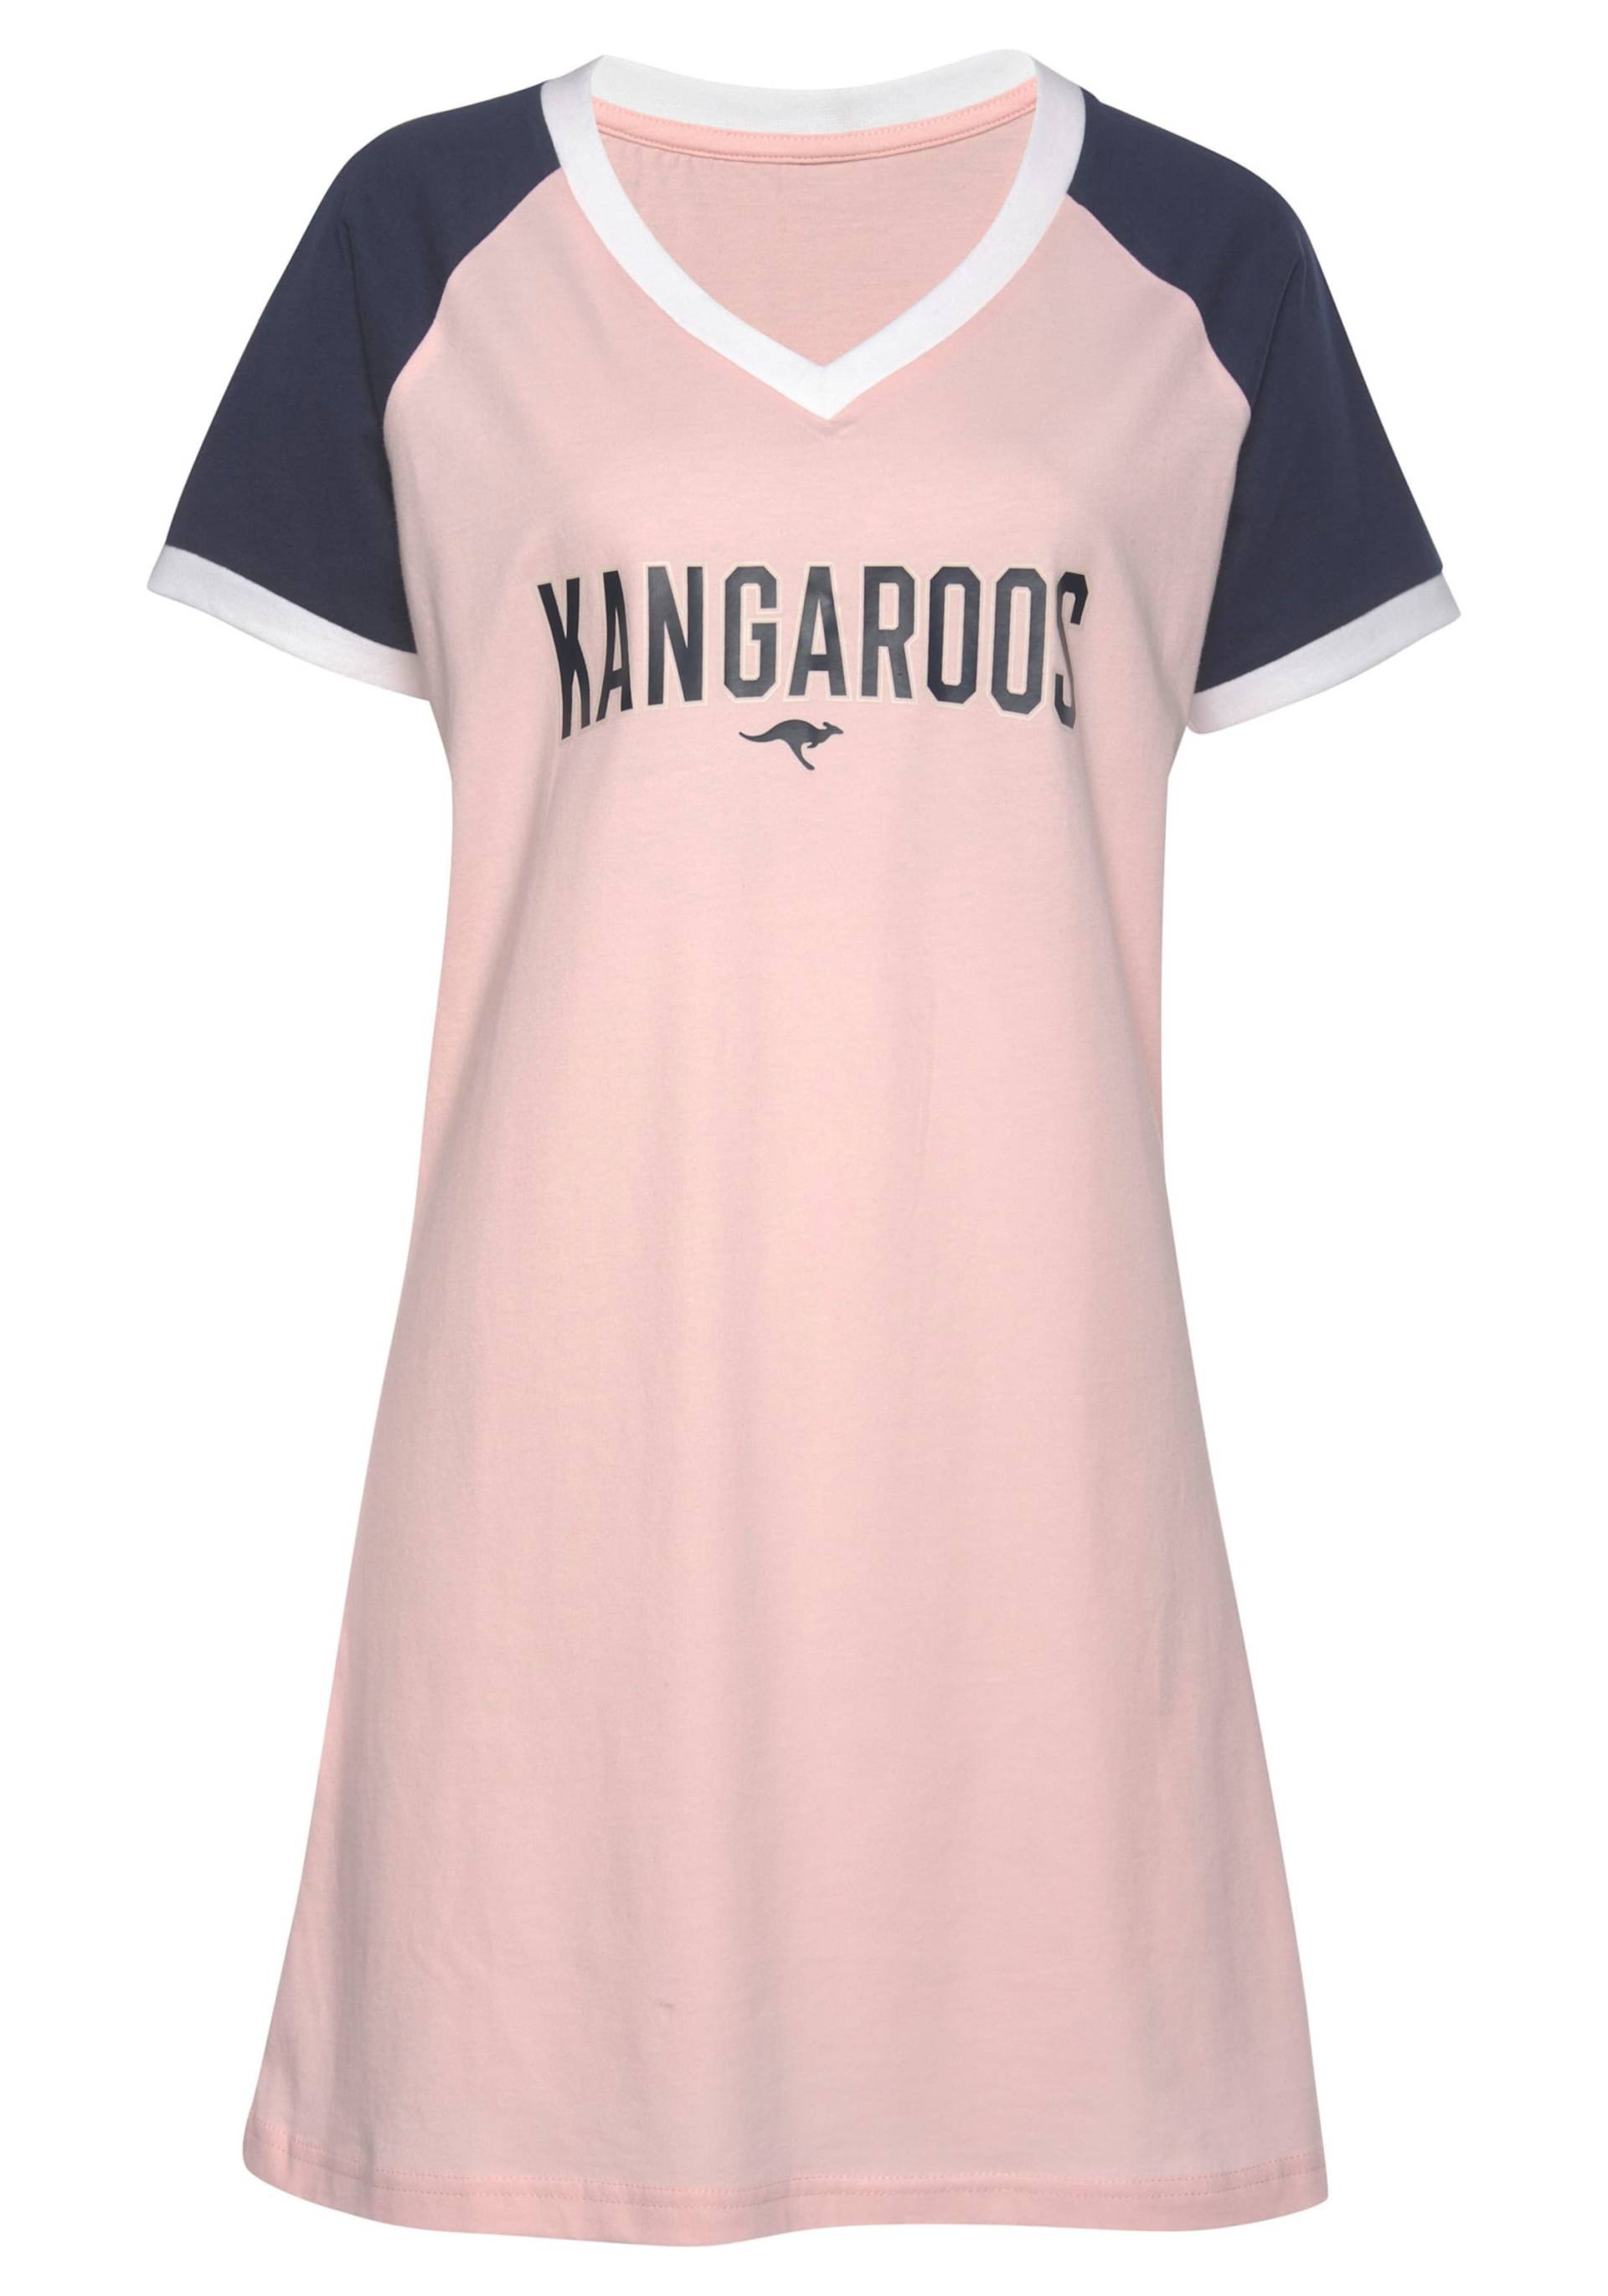 Bigshirt in rosa-dunkelblau von KangaROOS